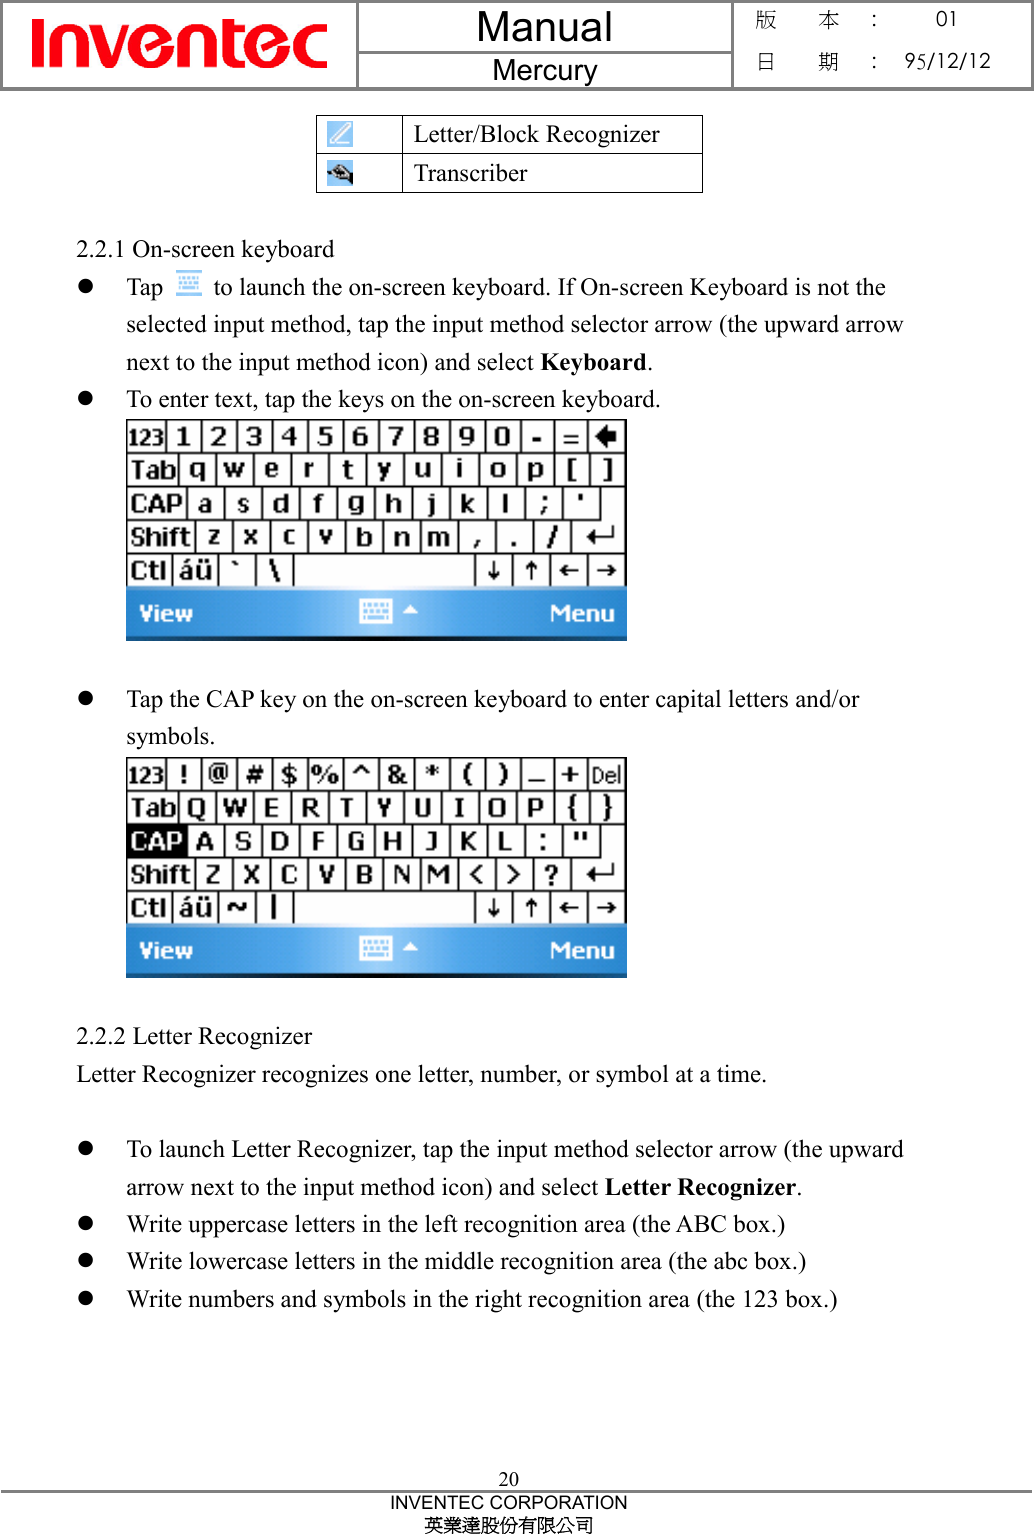 Manual  Mercury 版    本 :  01 日    期 : 95/12/12  20 INVENTEC CORPORATION 英業達股份有限公司   Letter/Block Recognizer  Transcriber  2.2.1 On-screen keyboard z Tap    to launch the on-screen keyboard. If On-screen Keyboard is not the selected input method, tap the input method selector arrow (the upward arrow next to the input method icon) and select Keyboard.  z To enter text, tap the keys on the on-screen keyboard.   z Tap the CAP key on the on-screen keyboard to enter capital letters and/or symbols.   2.2.2 Letter Recognizer Letter Recognizer recognizes one letter, number, or symbol at a time.  z To launch Letter Recognizer, tap the input method selector arrow (the upward arrow next to the input method icon) and select Letter Recognizer. z Write uppercase letters in the left recognition area (the ABC box.) z Write lowercase letters in the middle recognition area (the abc box.) z Write numbers and symbols in the right recognition area (the 123 box.) 